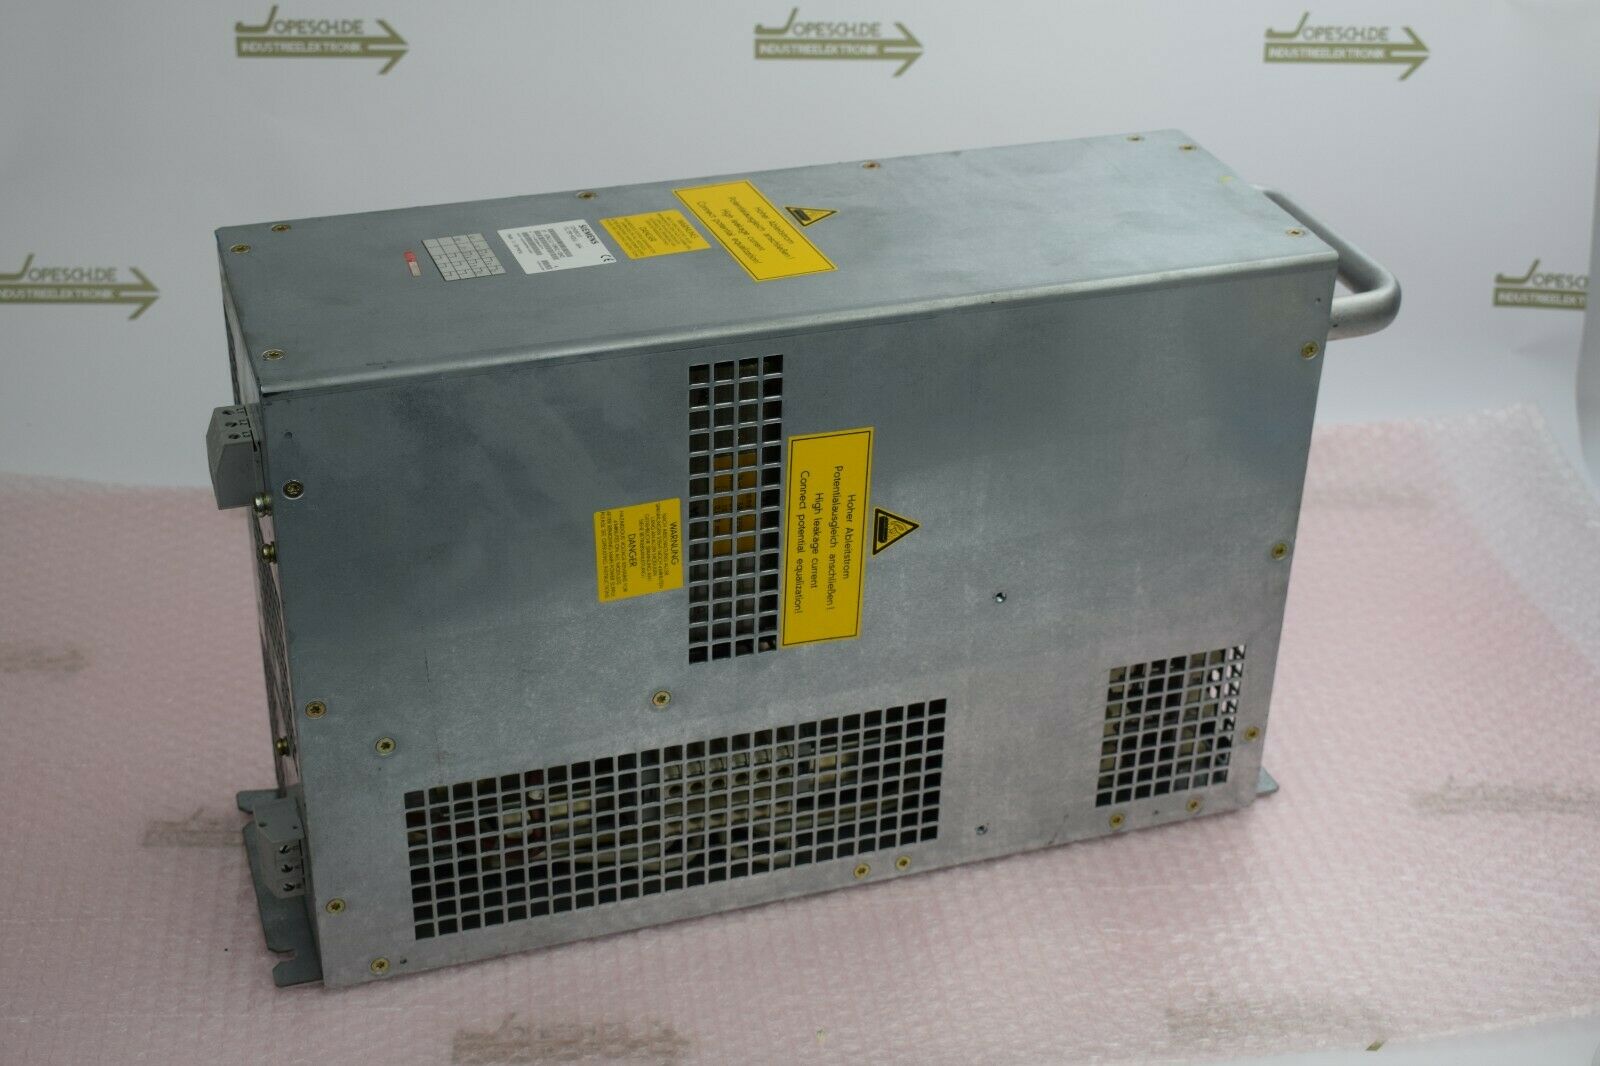 Siemens simodrive Filter-Modul 6SN1 111-0AA01-0BA2 ( 6SN1111-0AA01-0BA2 ) VA